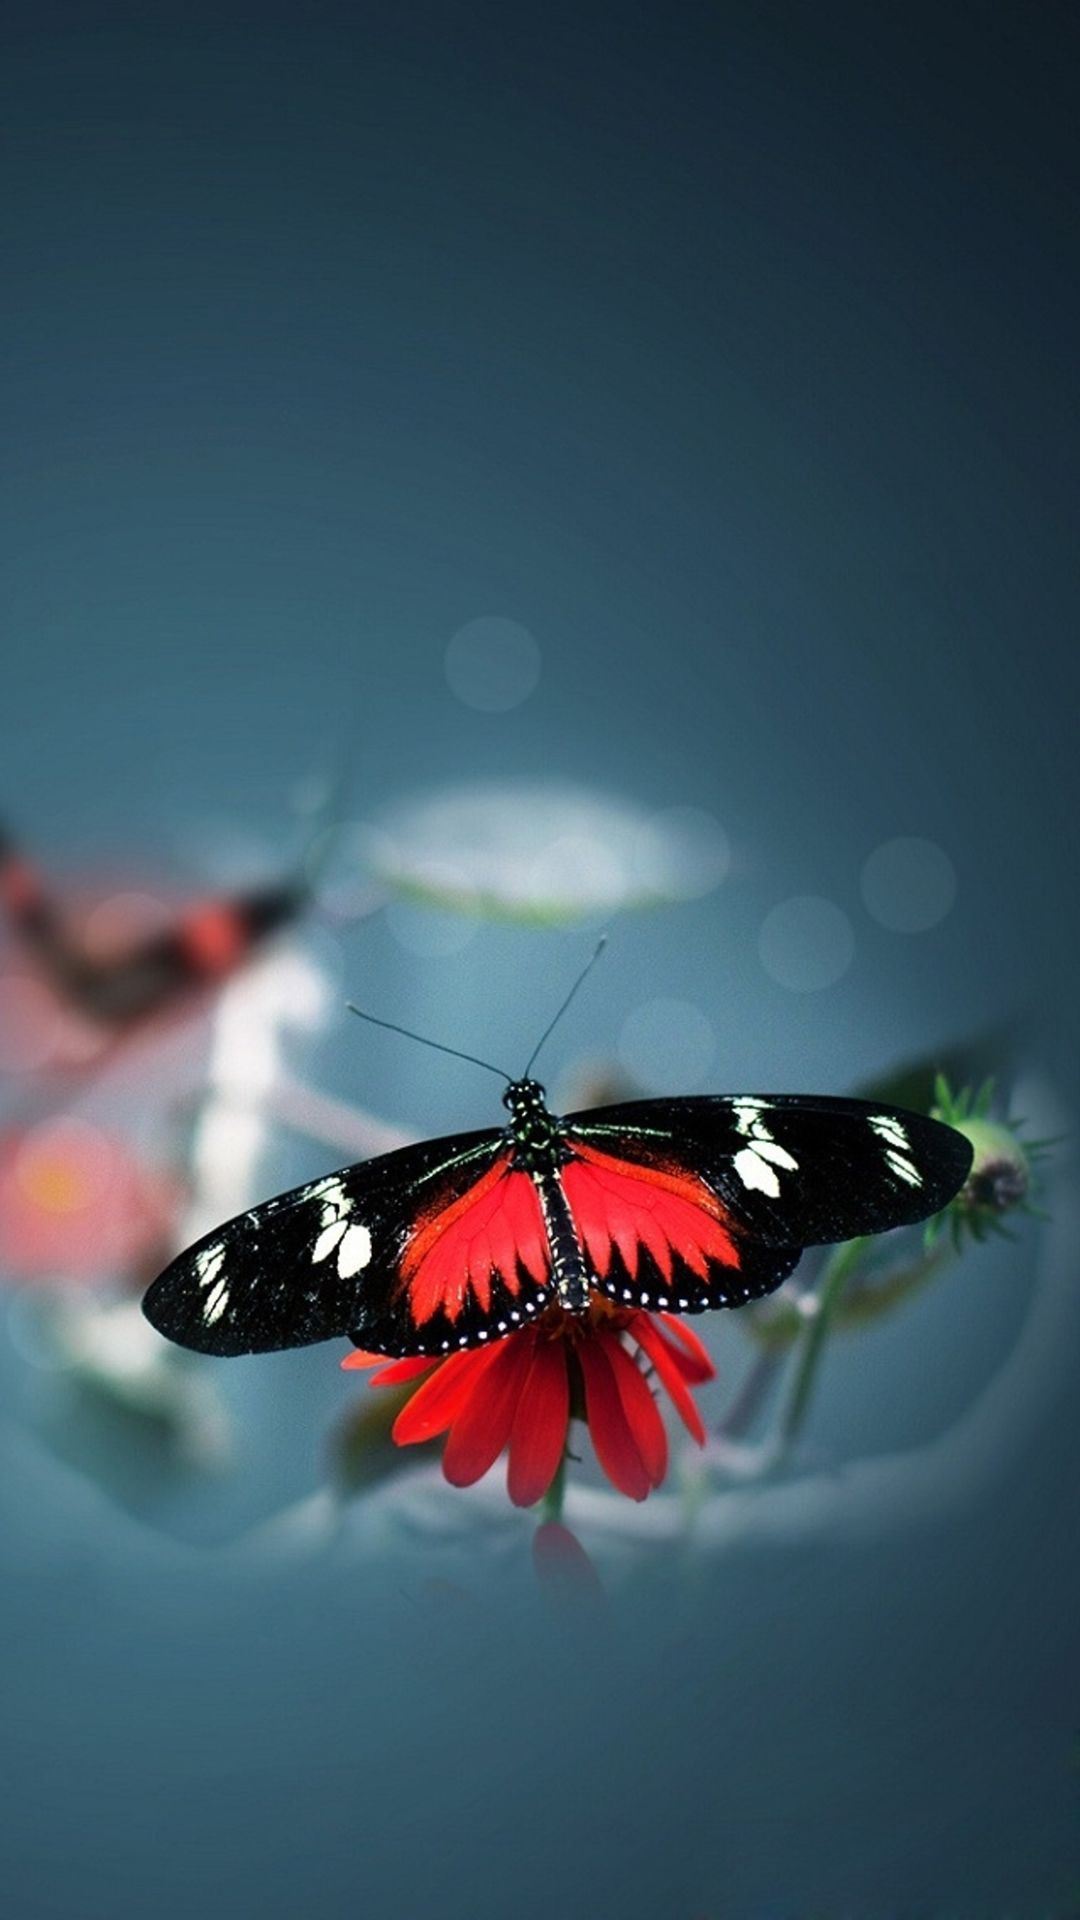 lyf mobile fondos de pantalla hd,mariposa,naturaleza,insecto,rojo,polillas y mariposas